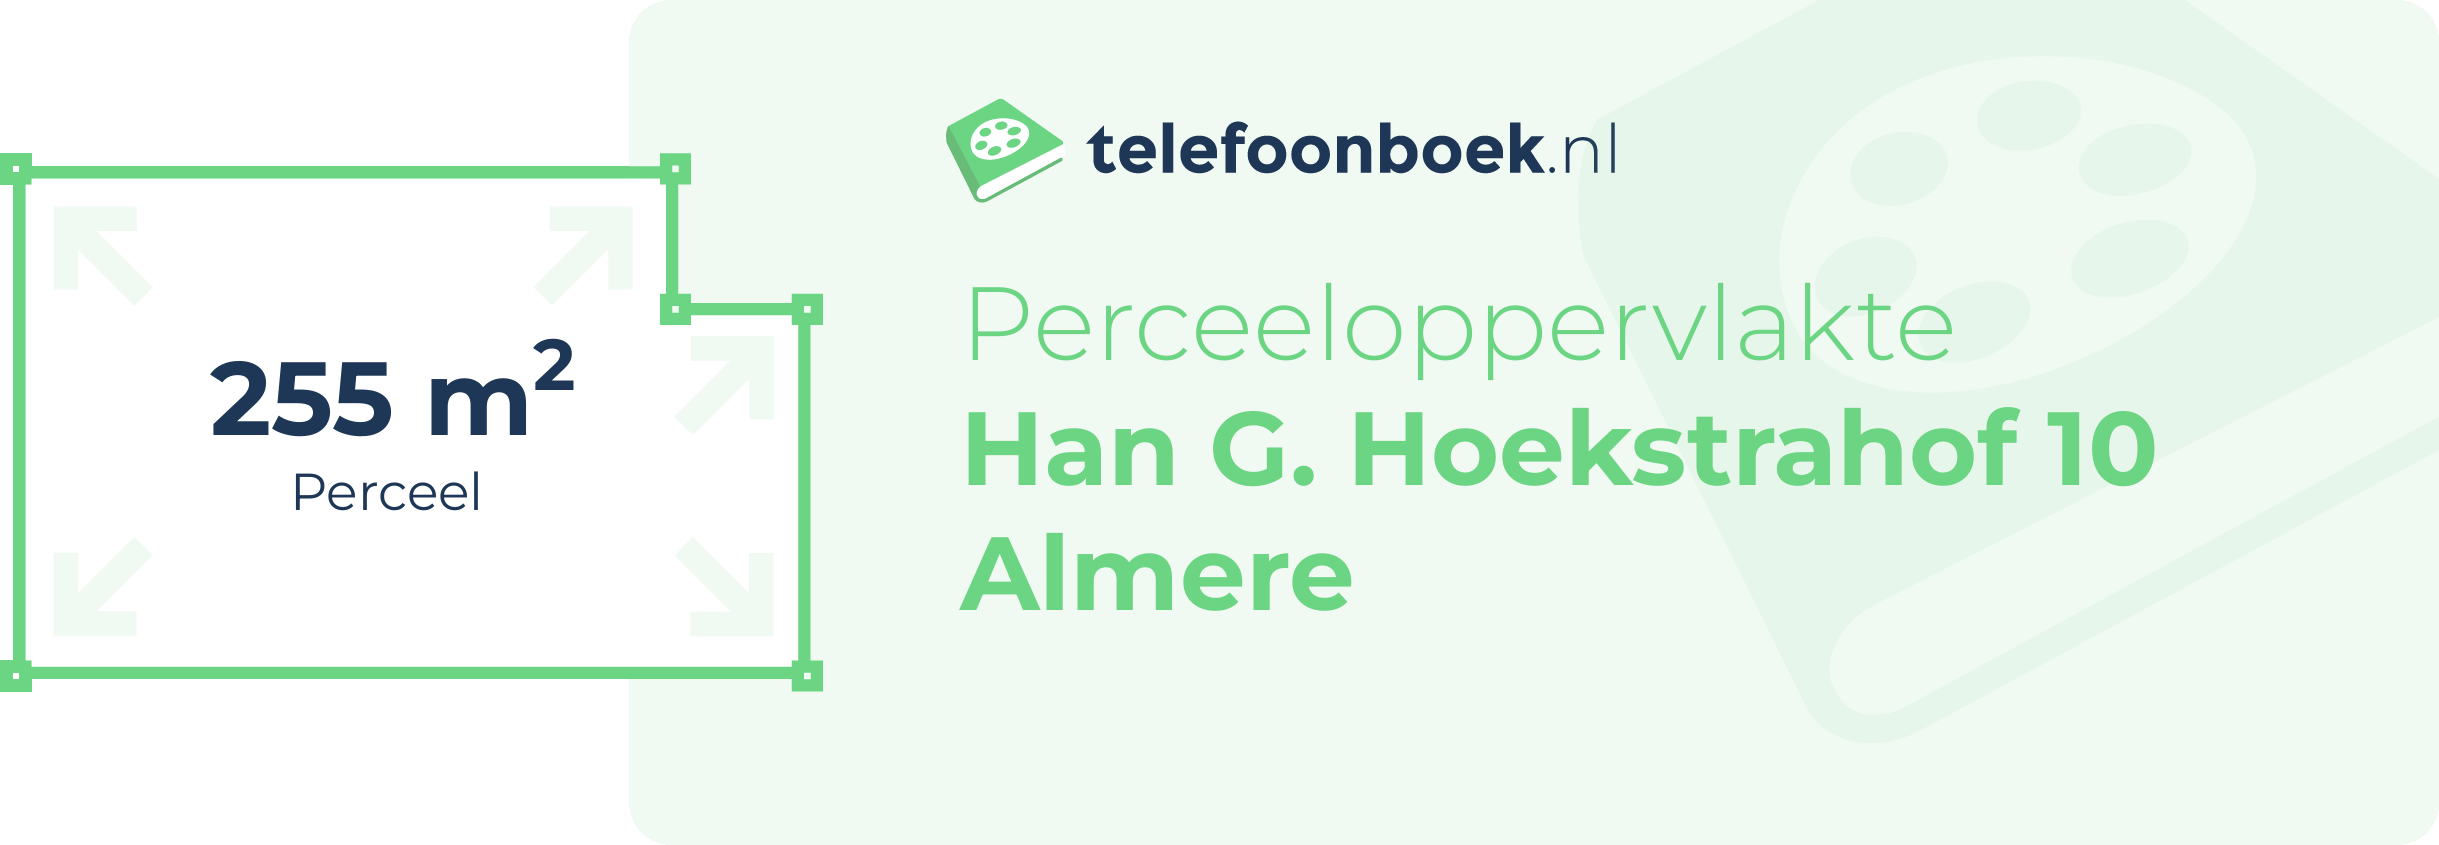 Perceeloppervlakte Han G. Hoekstrahof 10 Almere